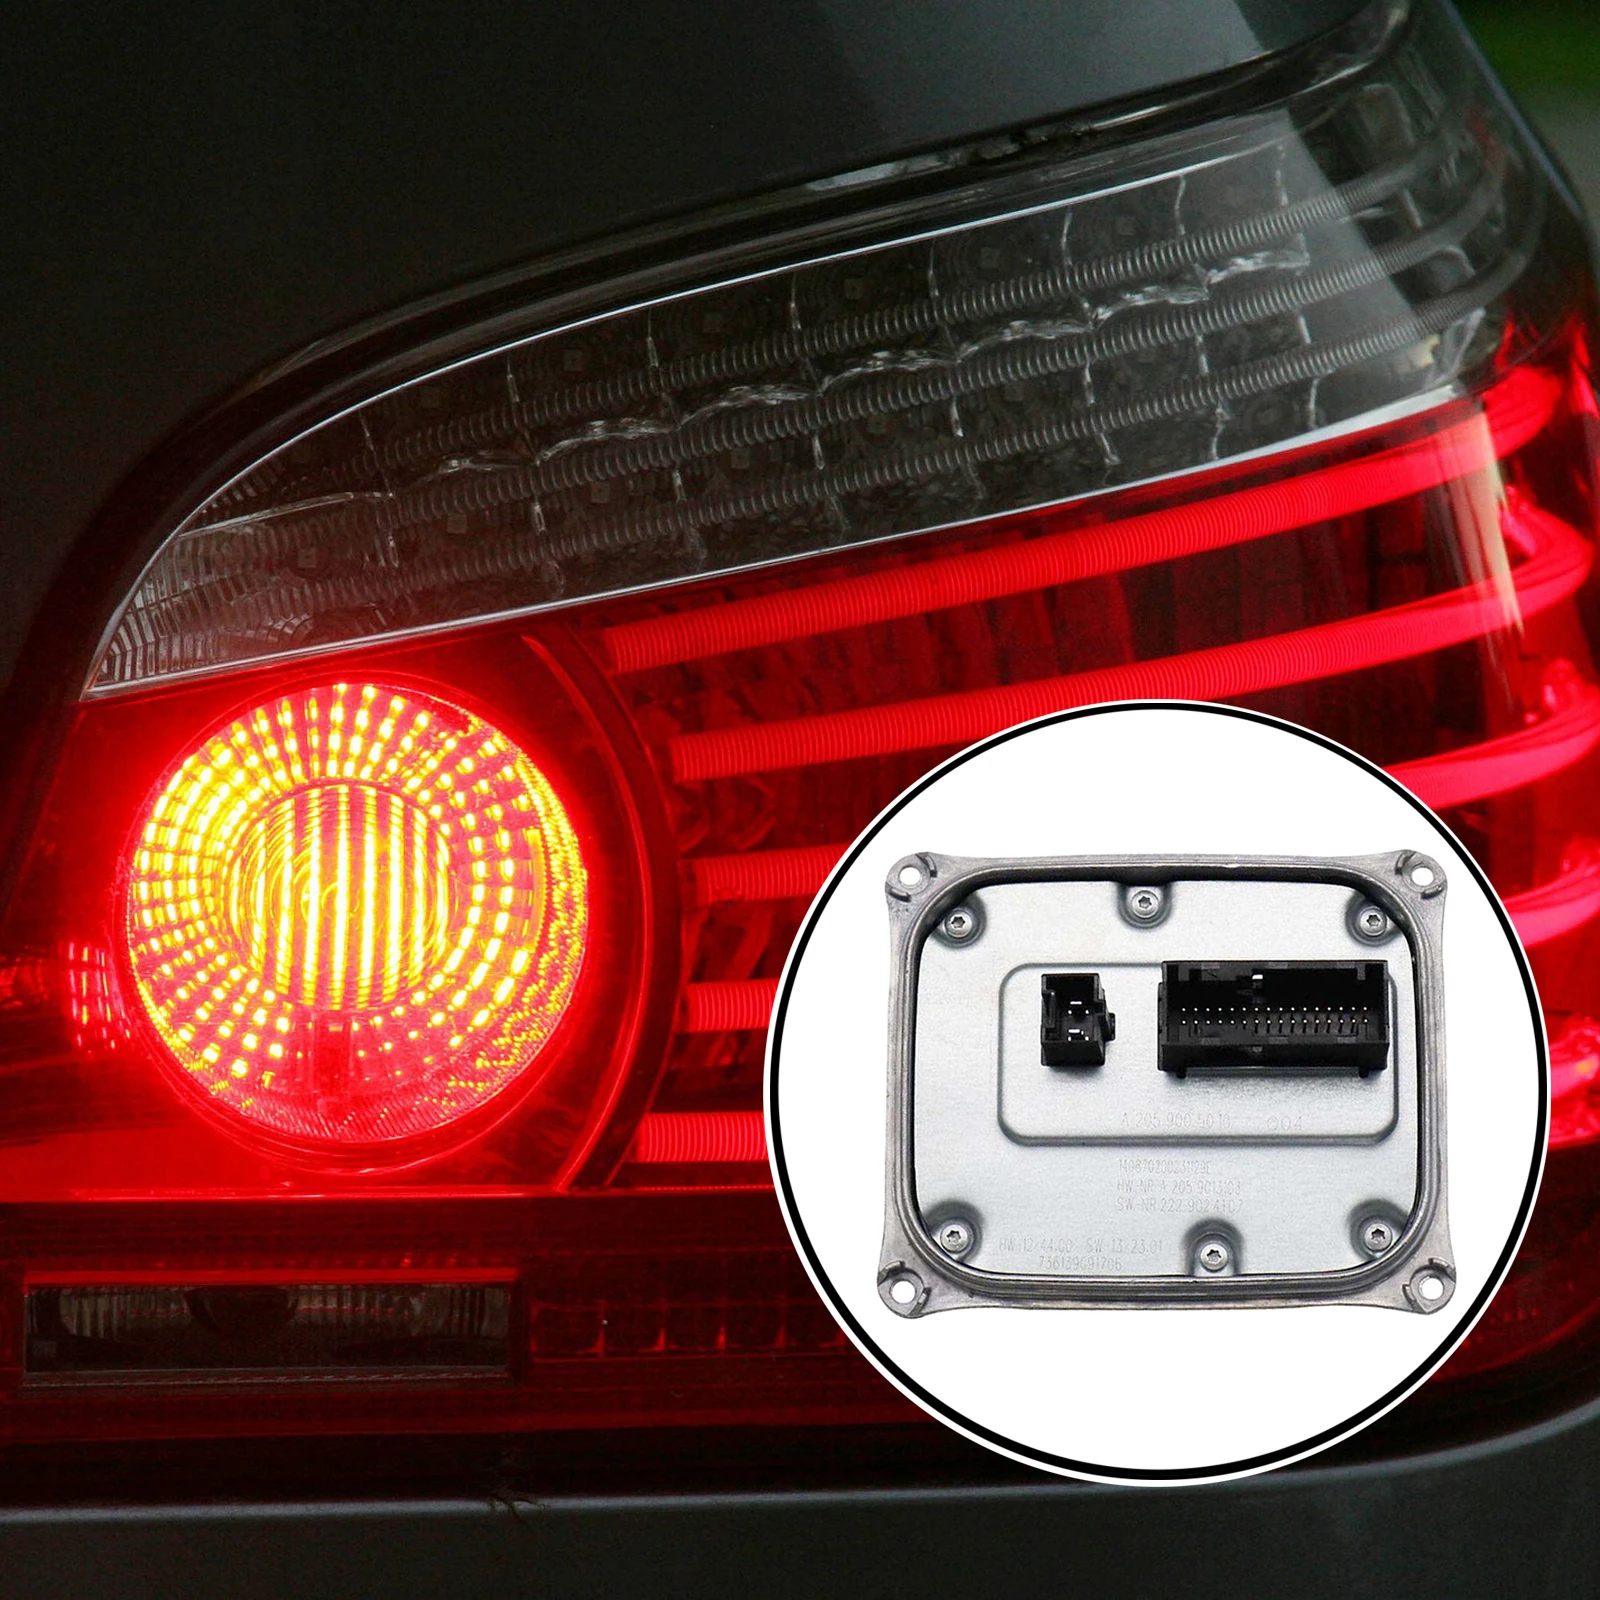 A2229008005 LED Headlight Control Unit Ballast OEM For Mercedes Parts Accessories Car Truck Parts Lighting